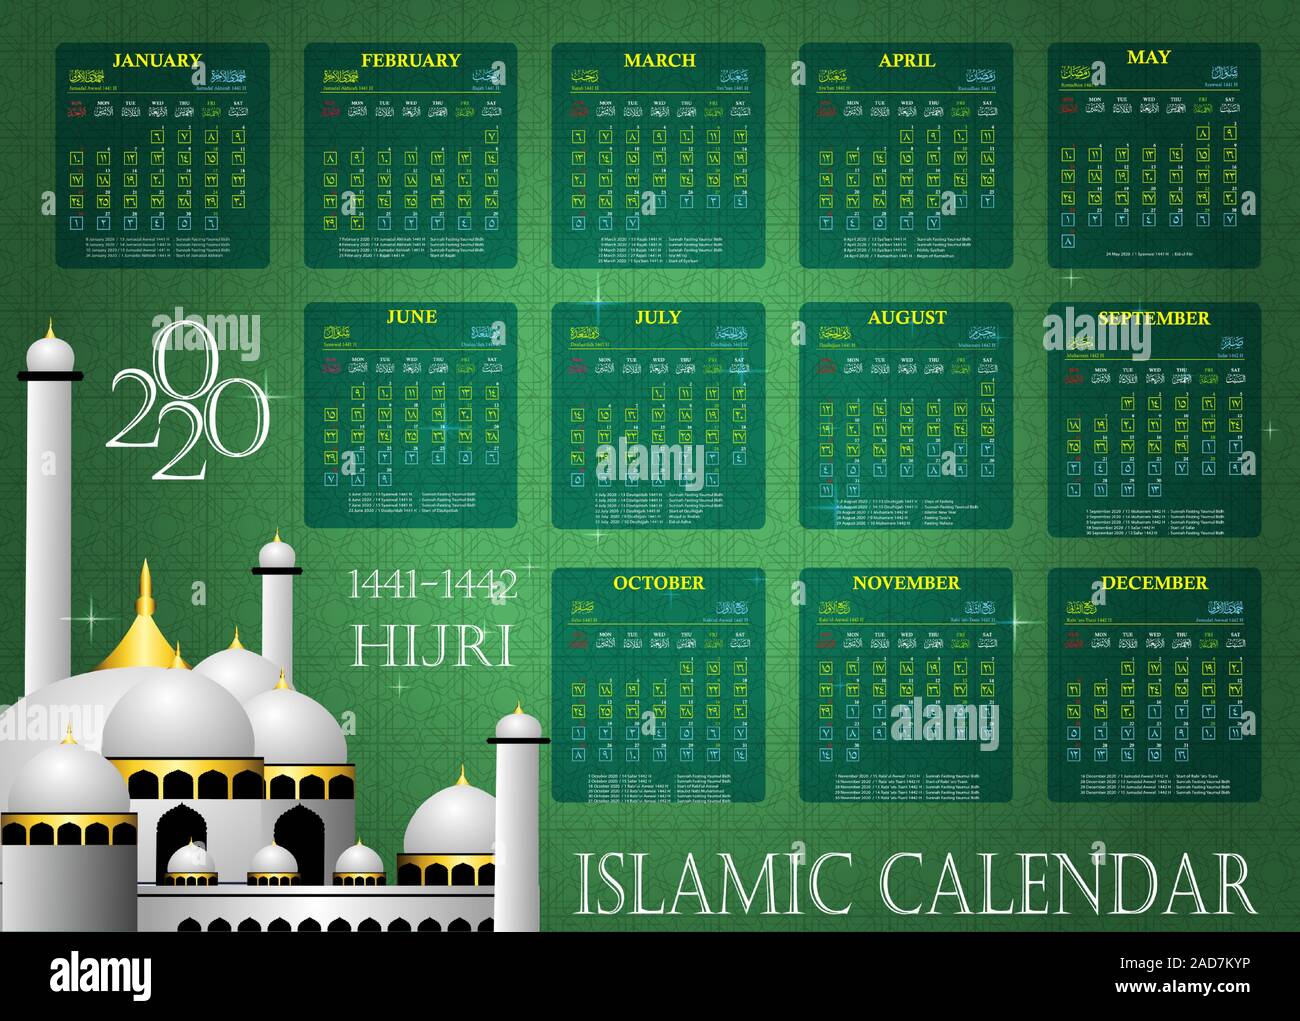 islamic calendar 2020, 1441-1442 hijri calendar Stock Vector Image